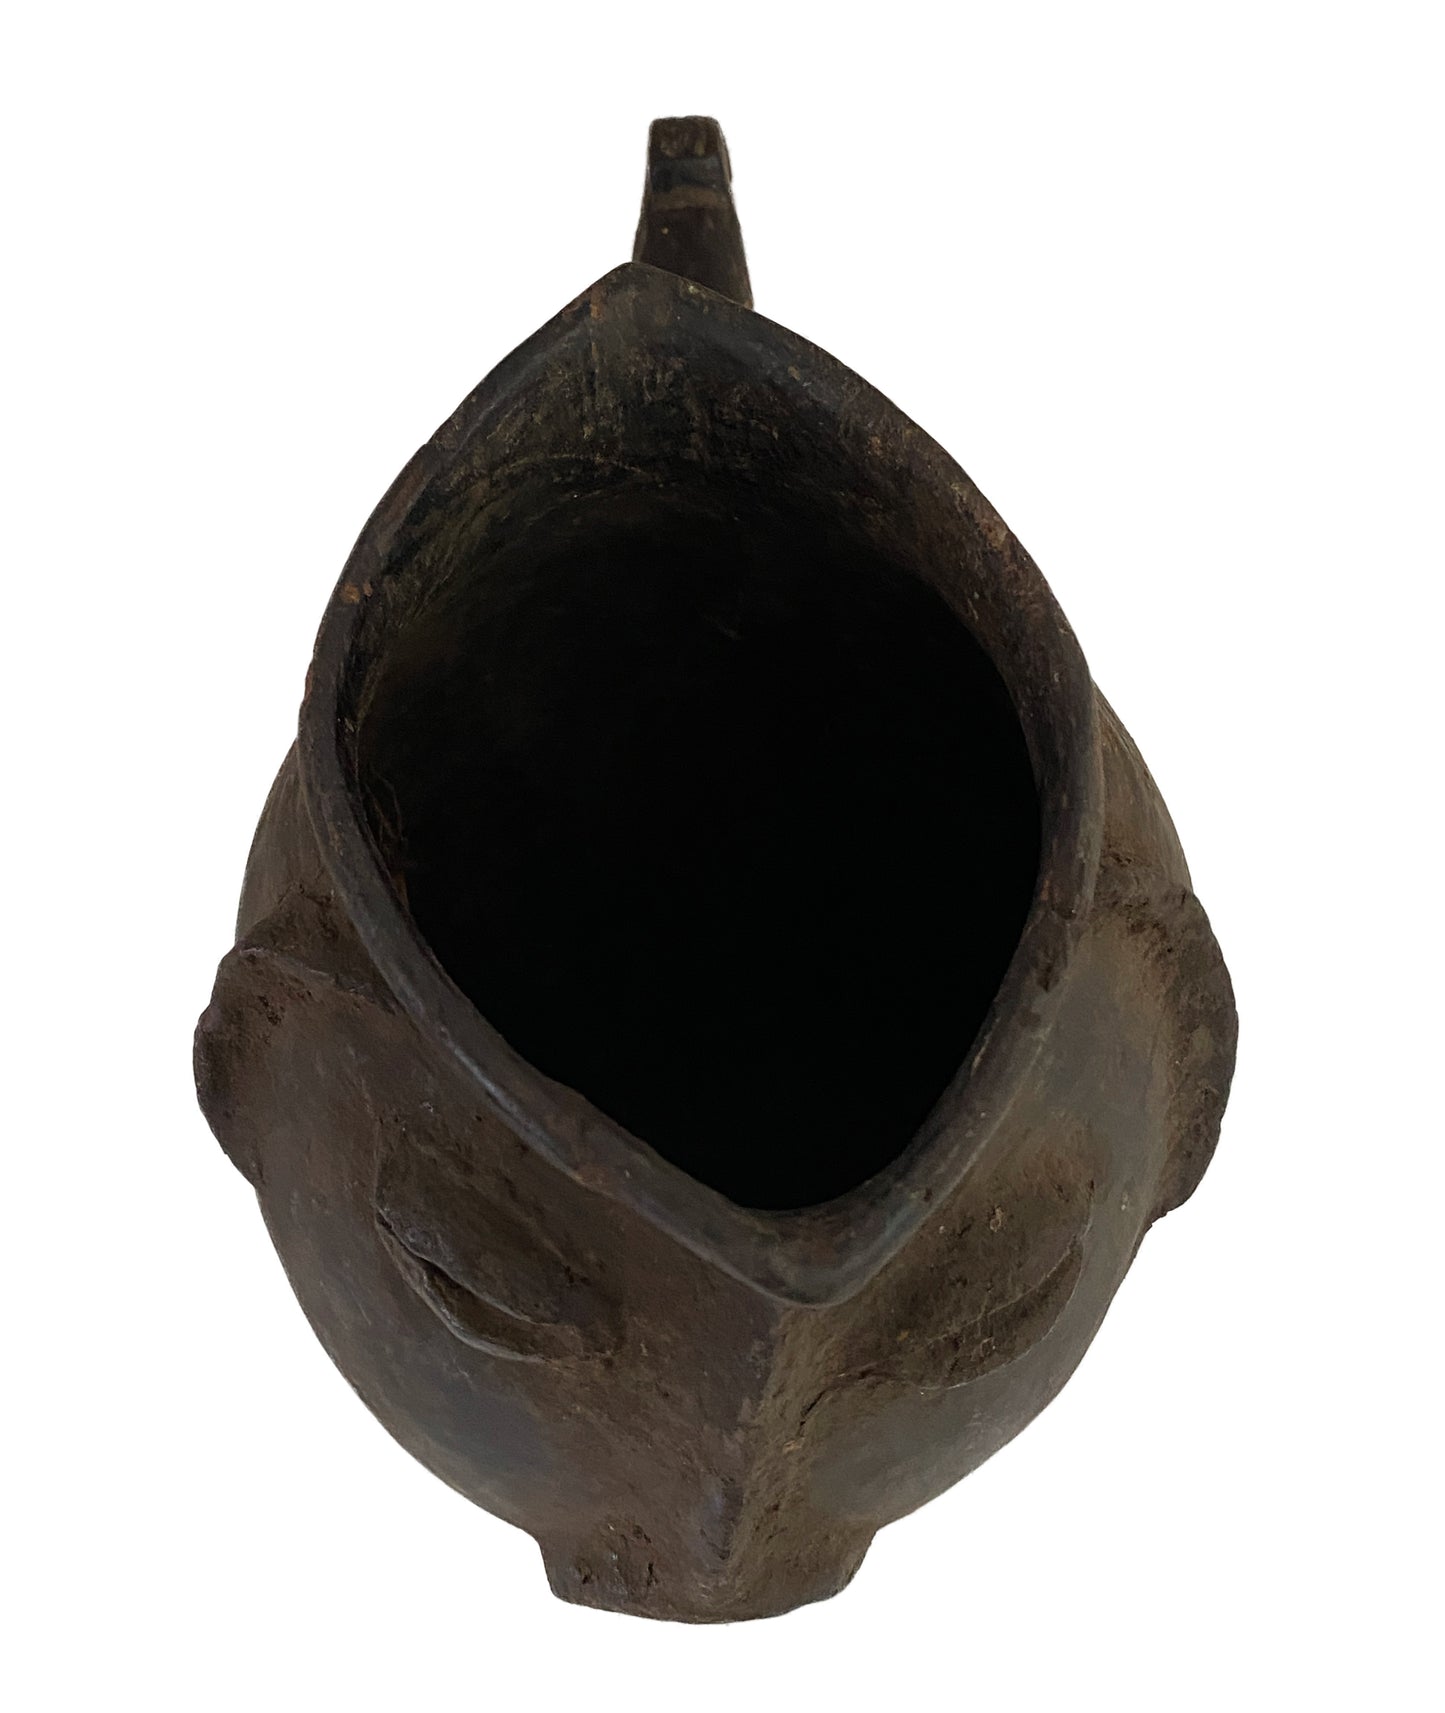 #3740 Kuba wooden Cup Figural Head Congo